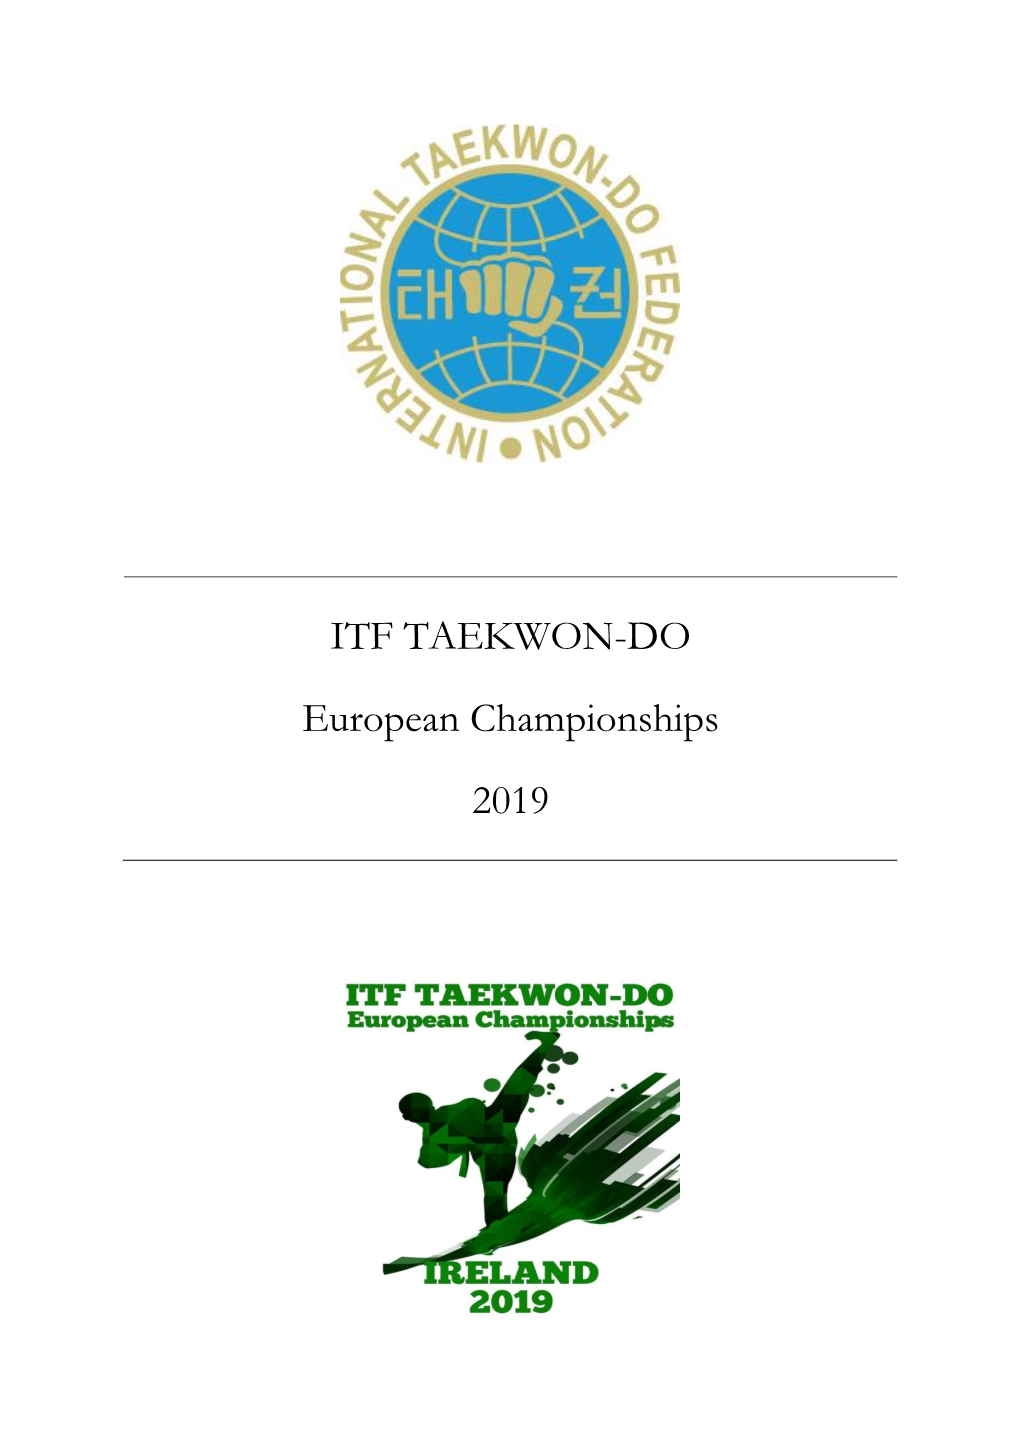 ITF TAEKWON-DO European Championships 2019